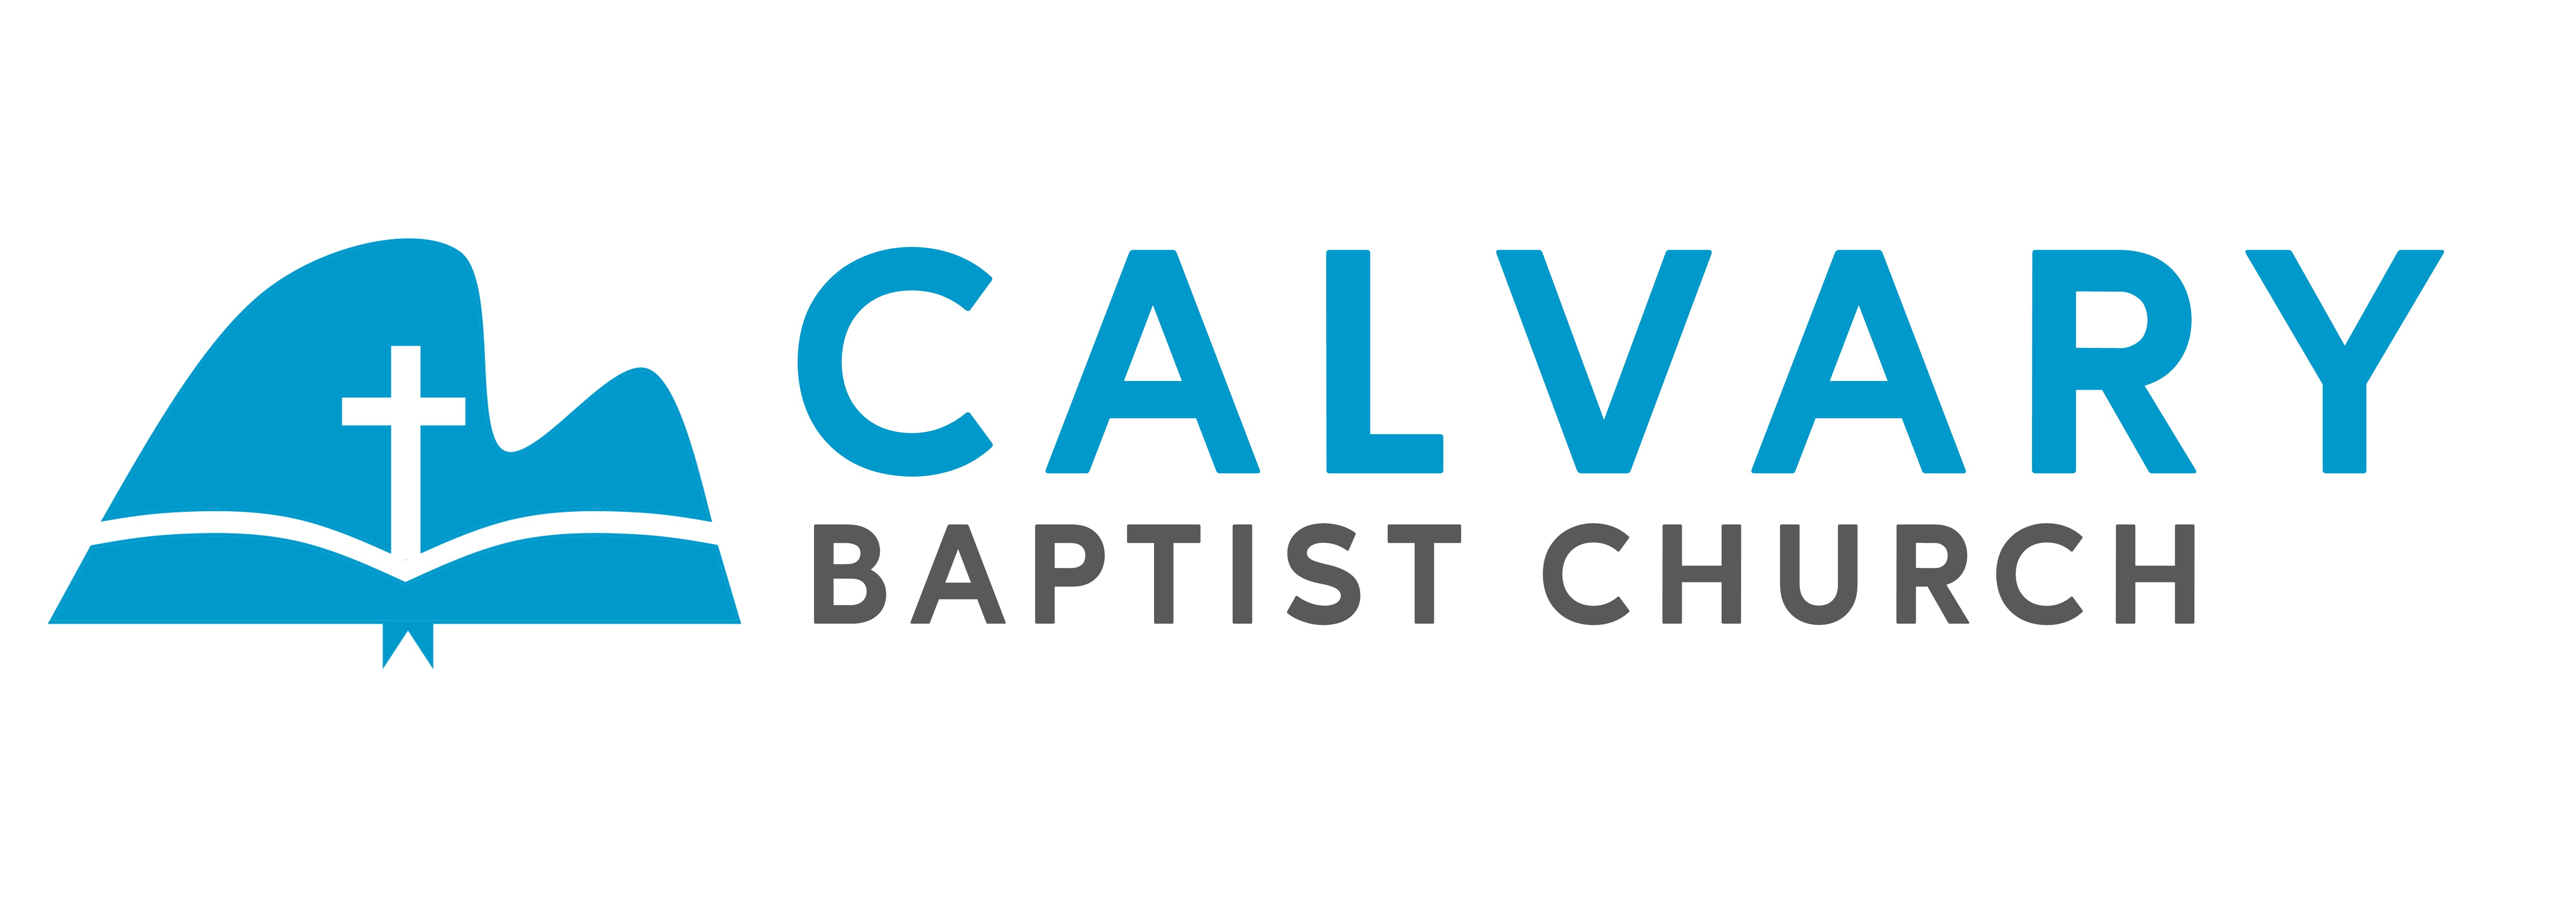 Full Church Logo CBc